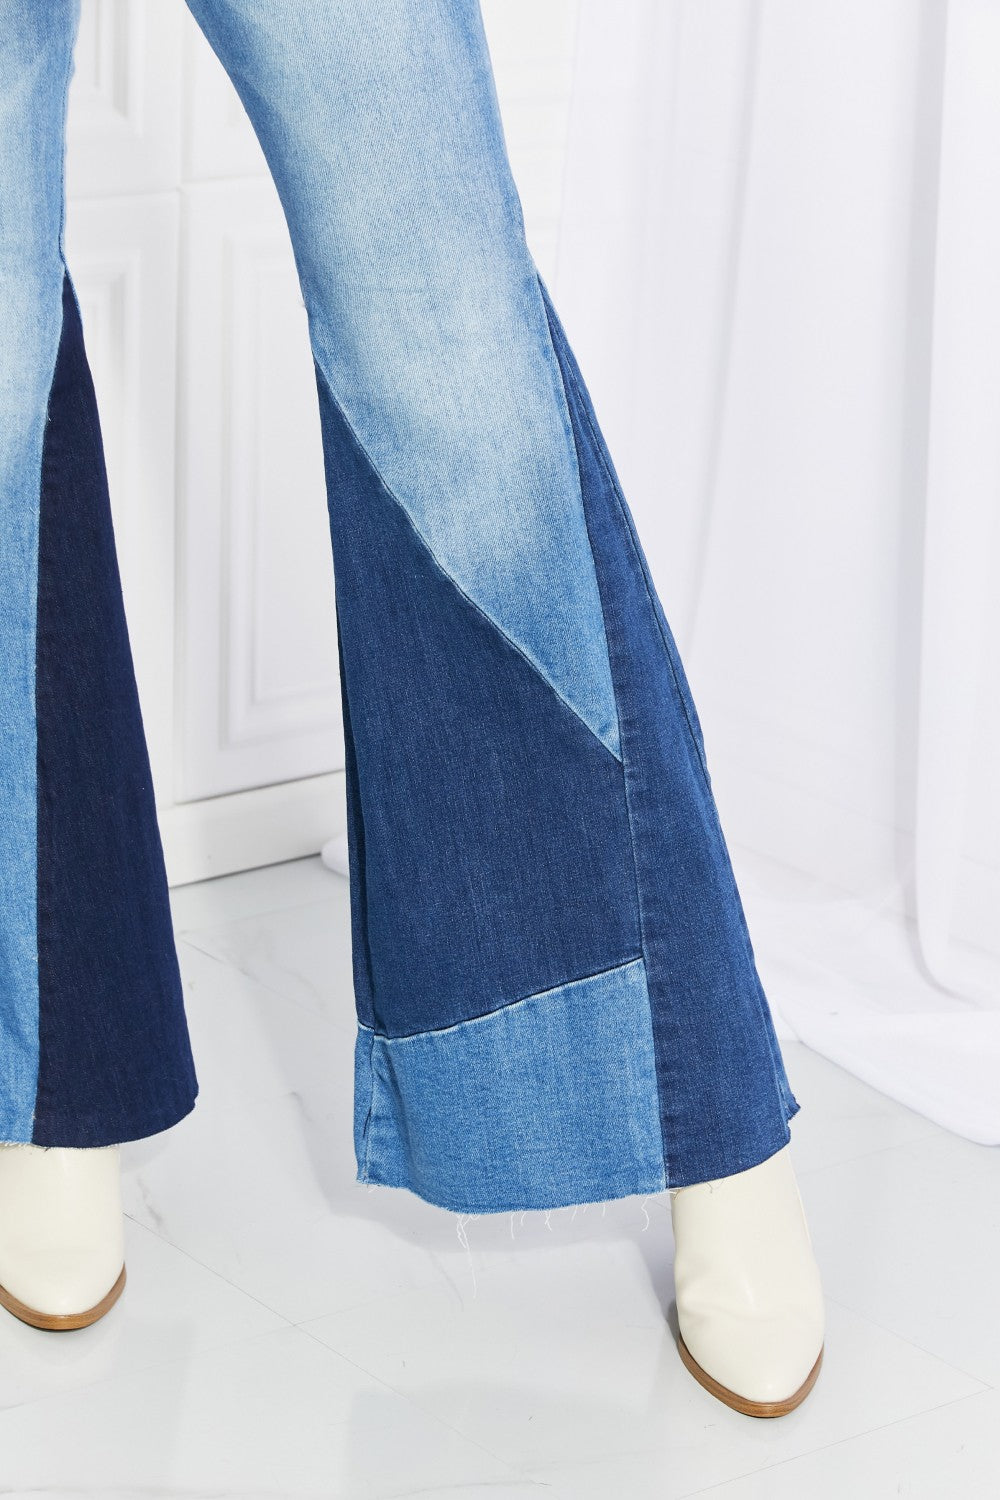 Dark Slate Blue Vibrant Sienna Full Size Color Block Flare Jeans